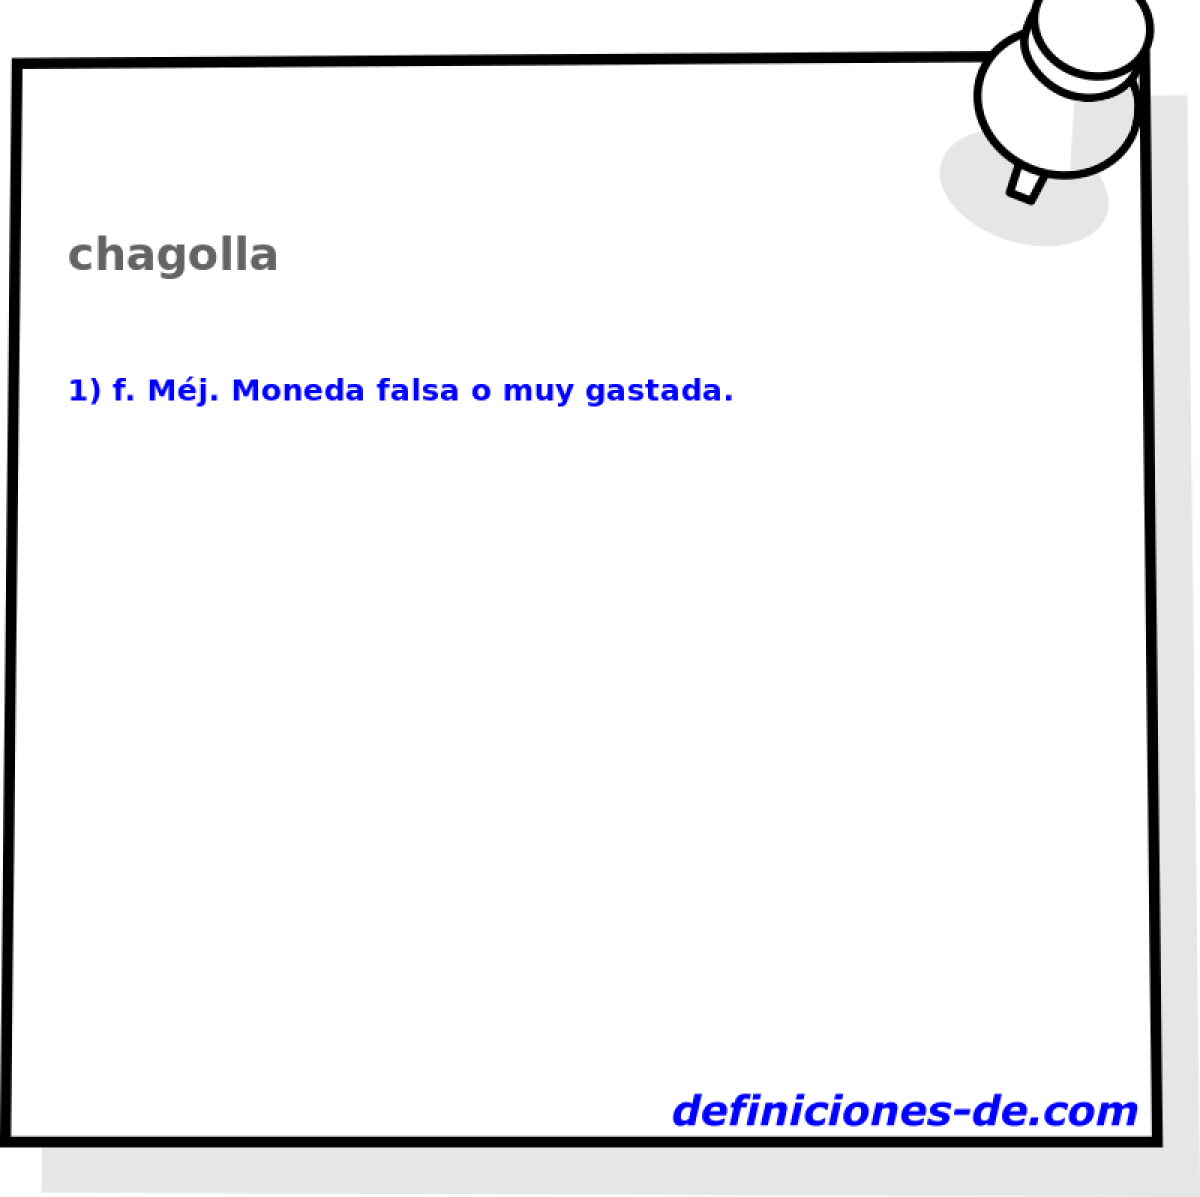 chagolla 